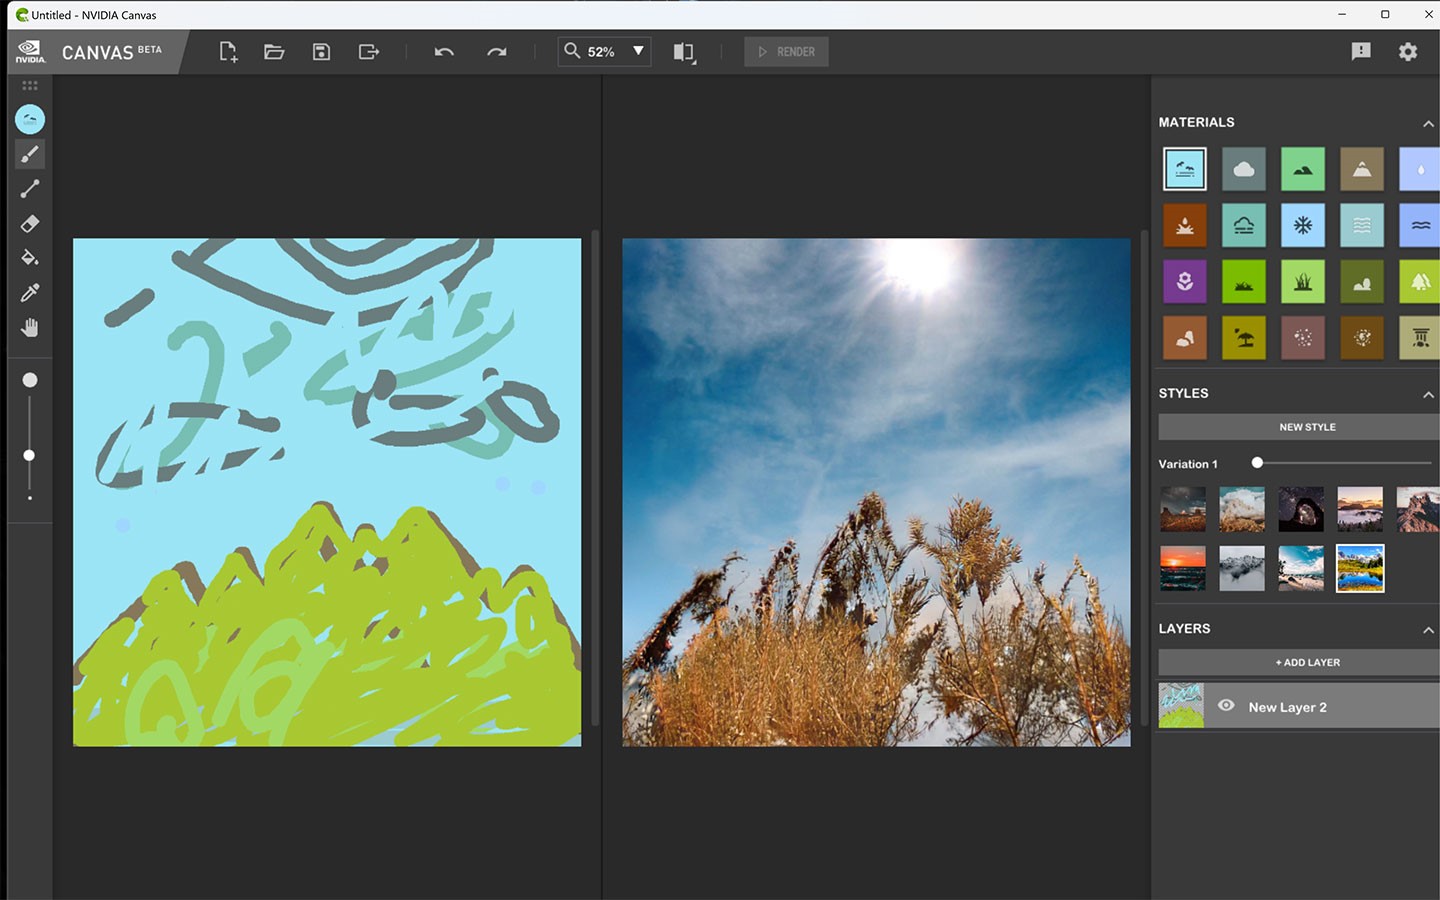 NVIDIA Canvas 可以利用簡單的畫面塗鴉自動生成擬真的風景照片。